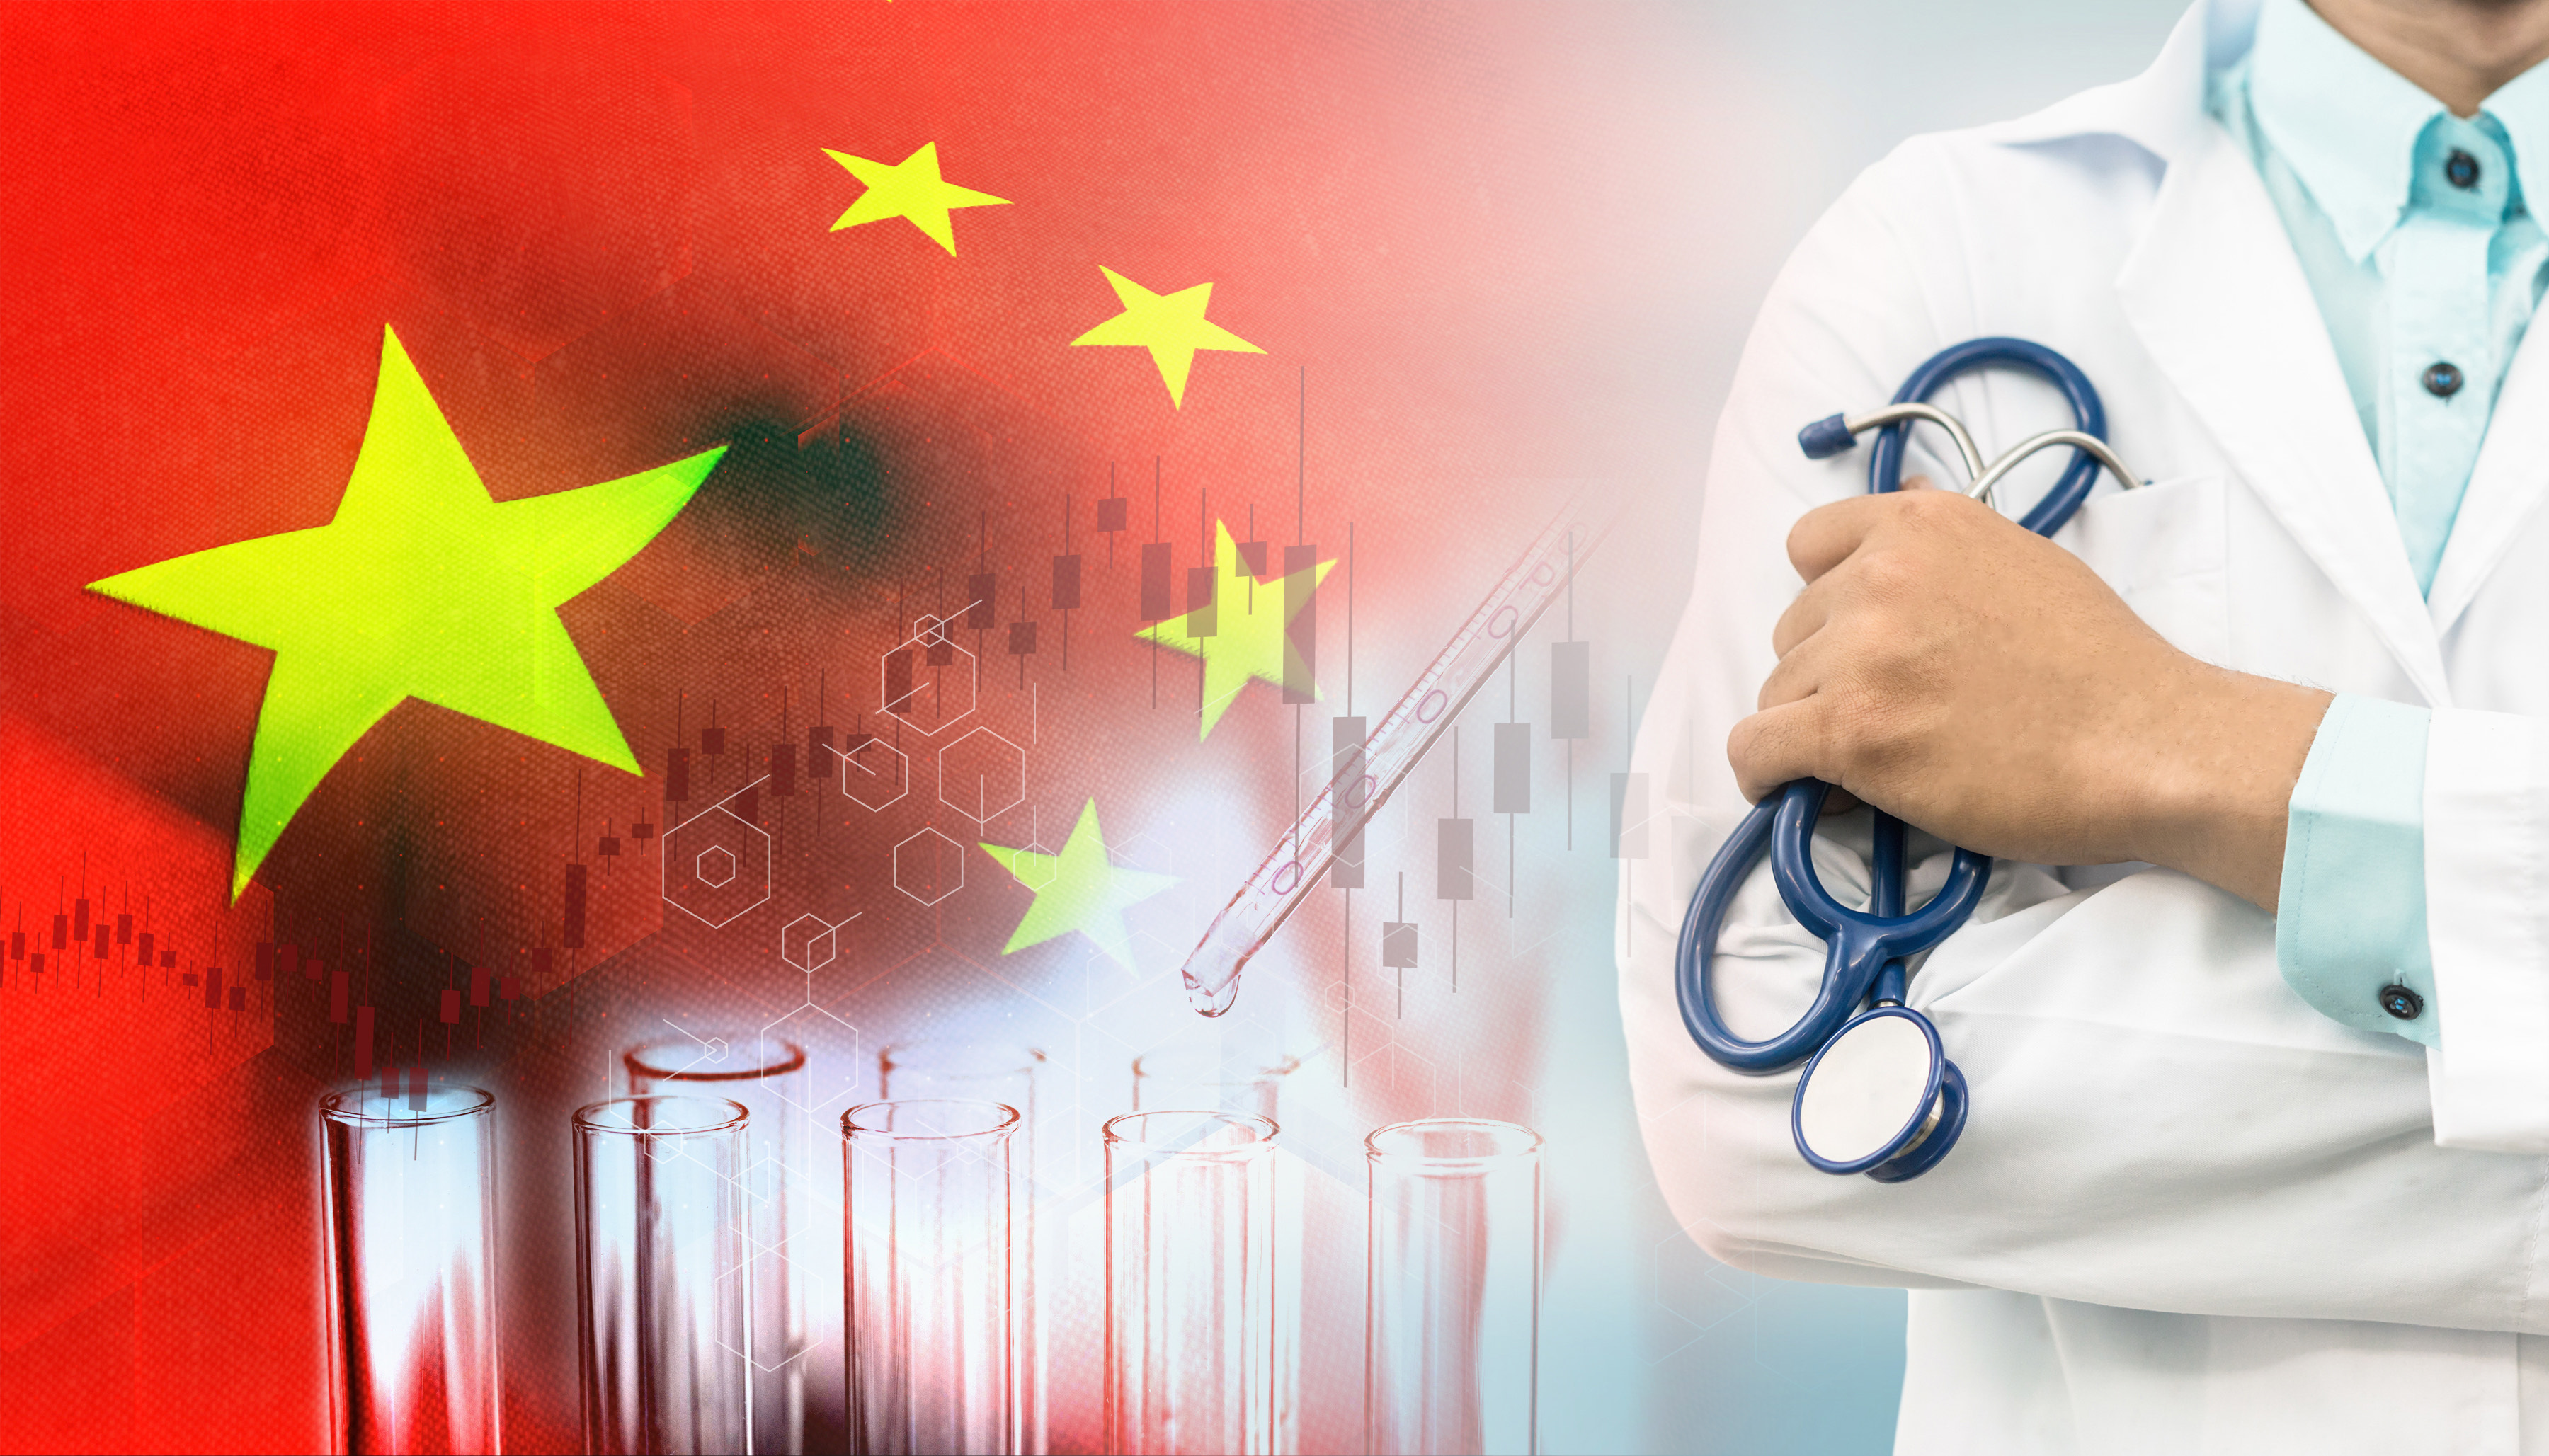 china medical technologies case study